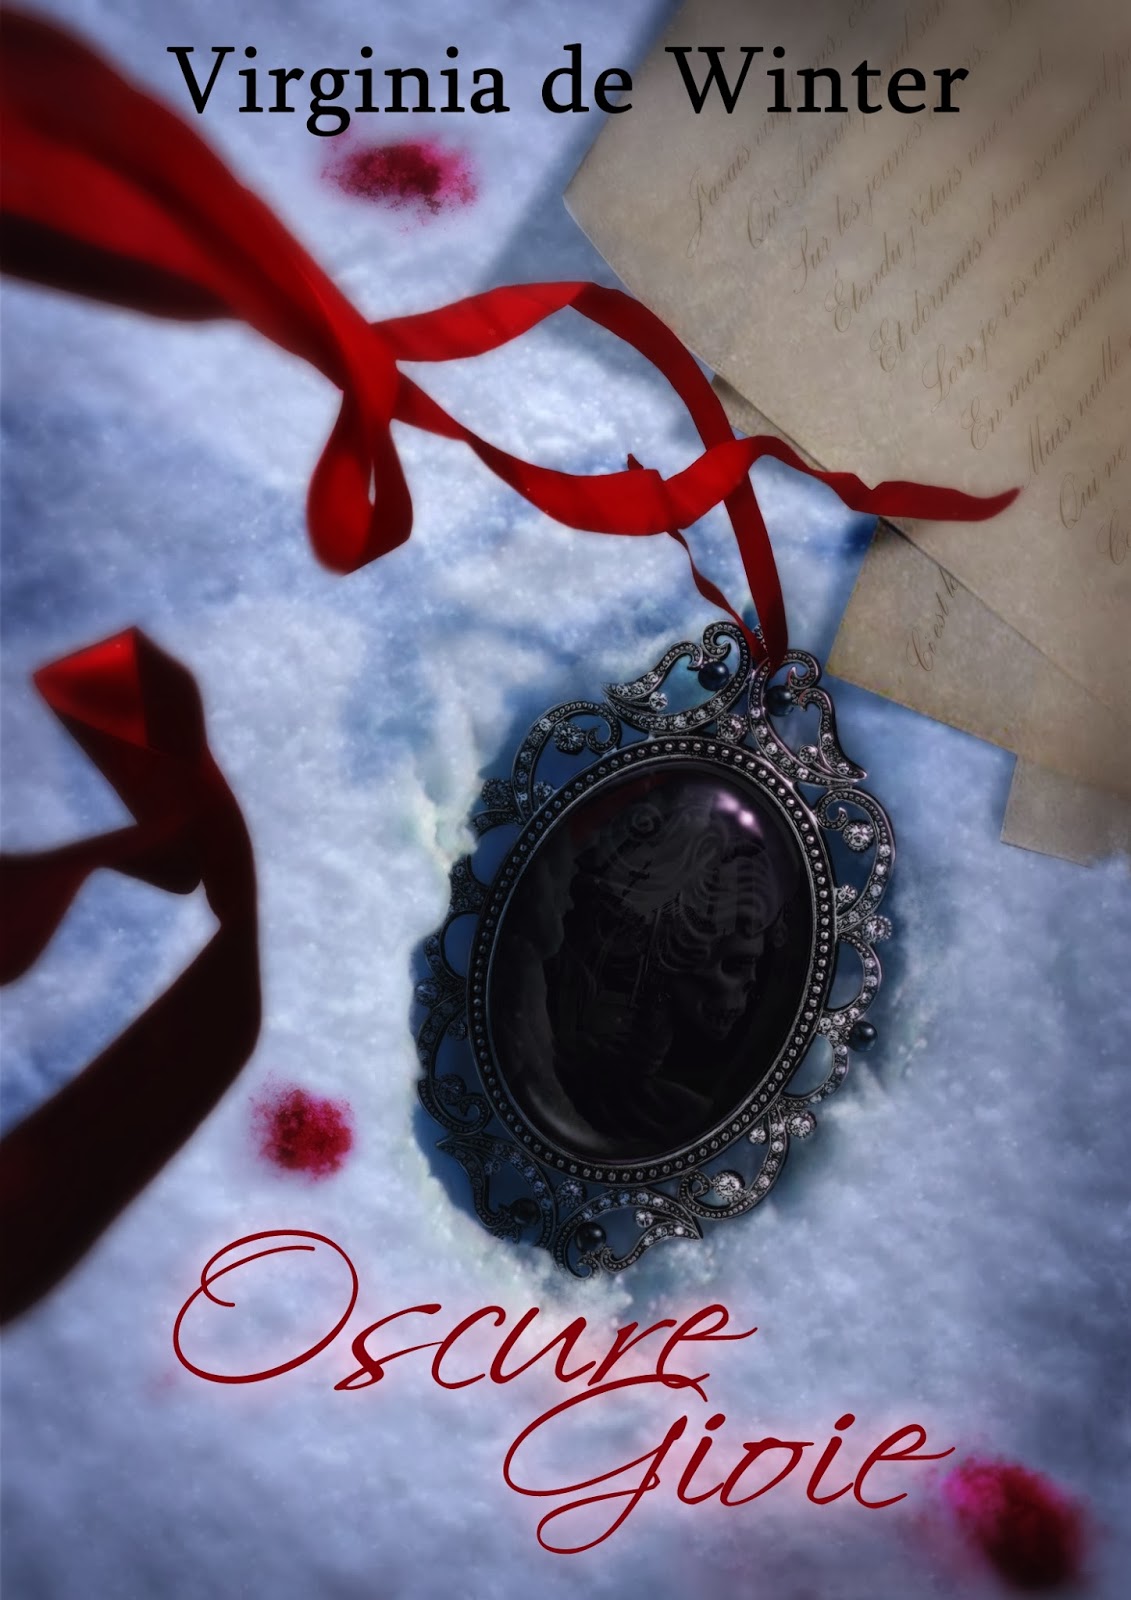 Oscure gioie – Bijoux de Deuil, di Virginia de Winter